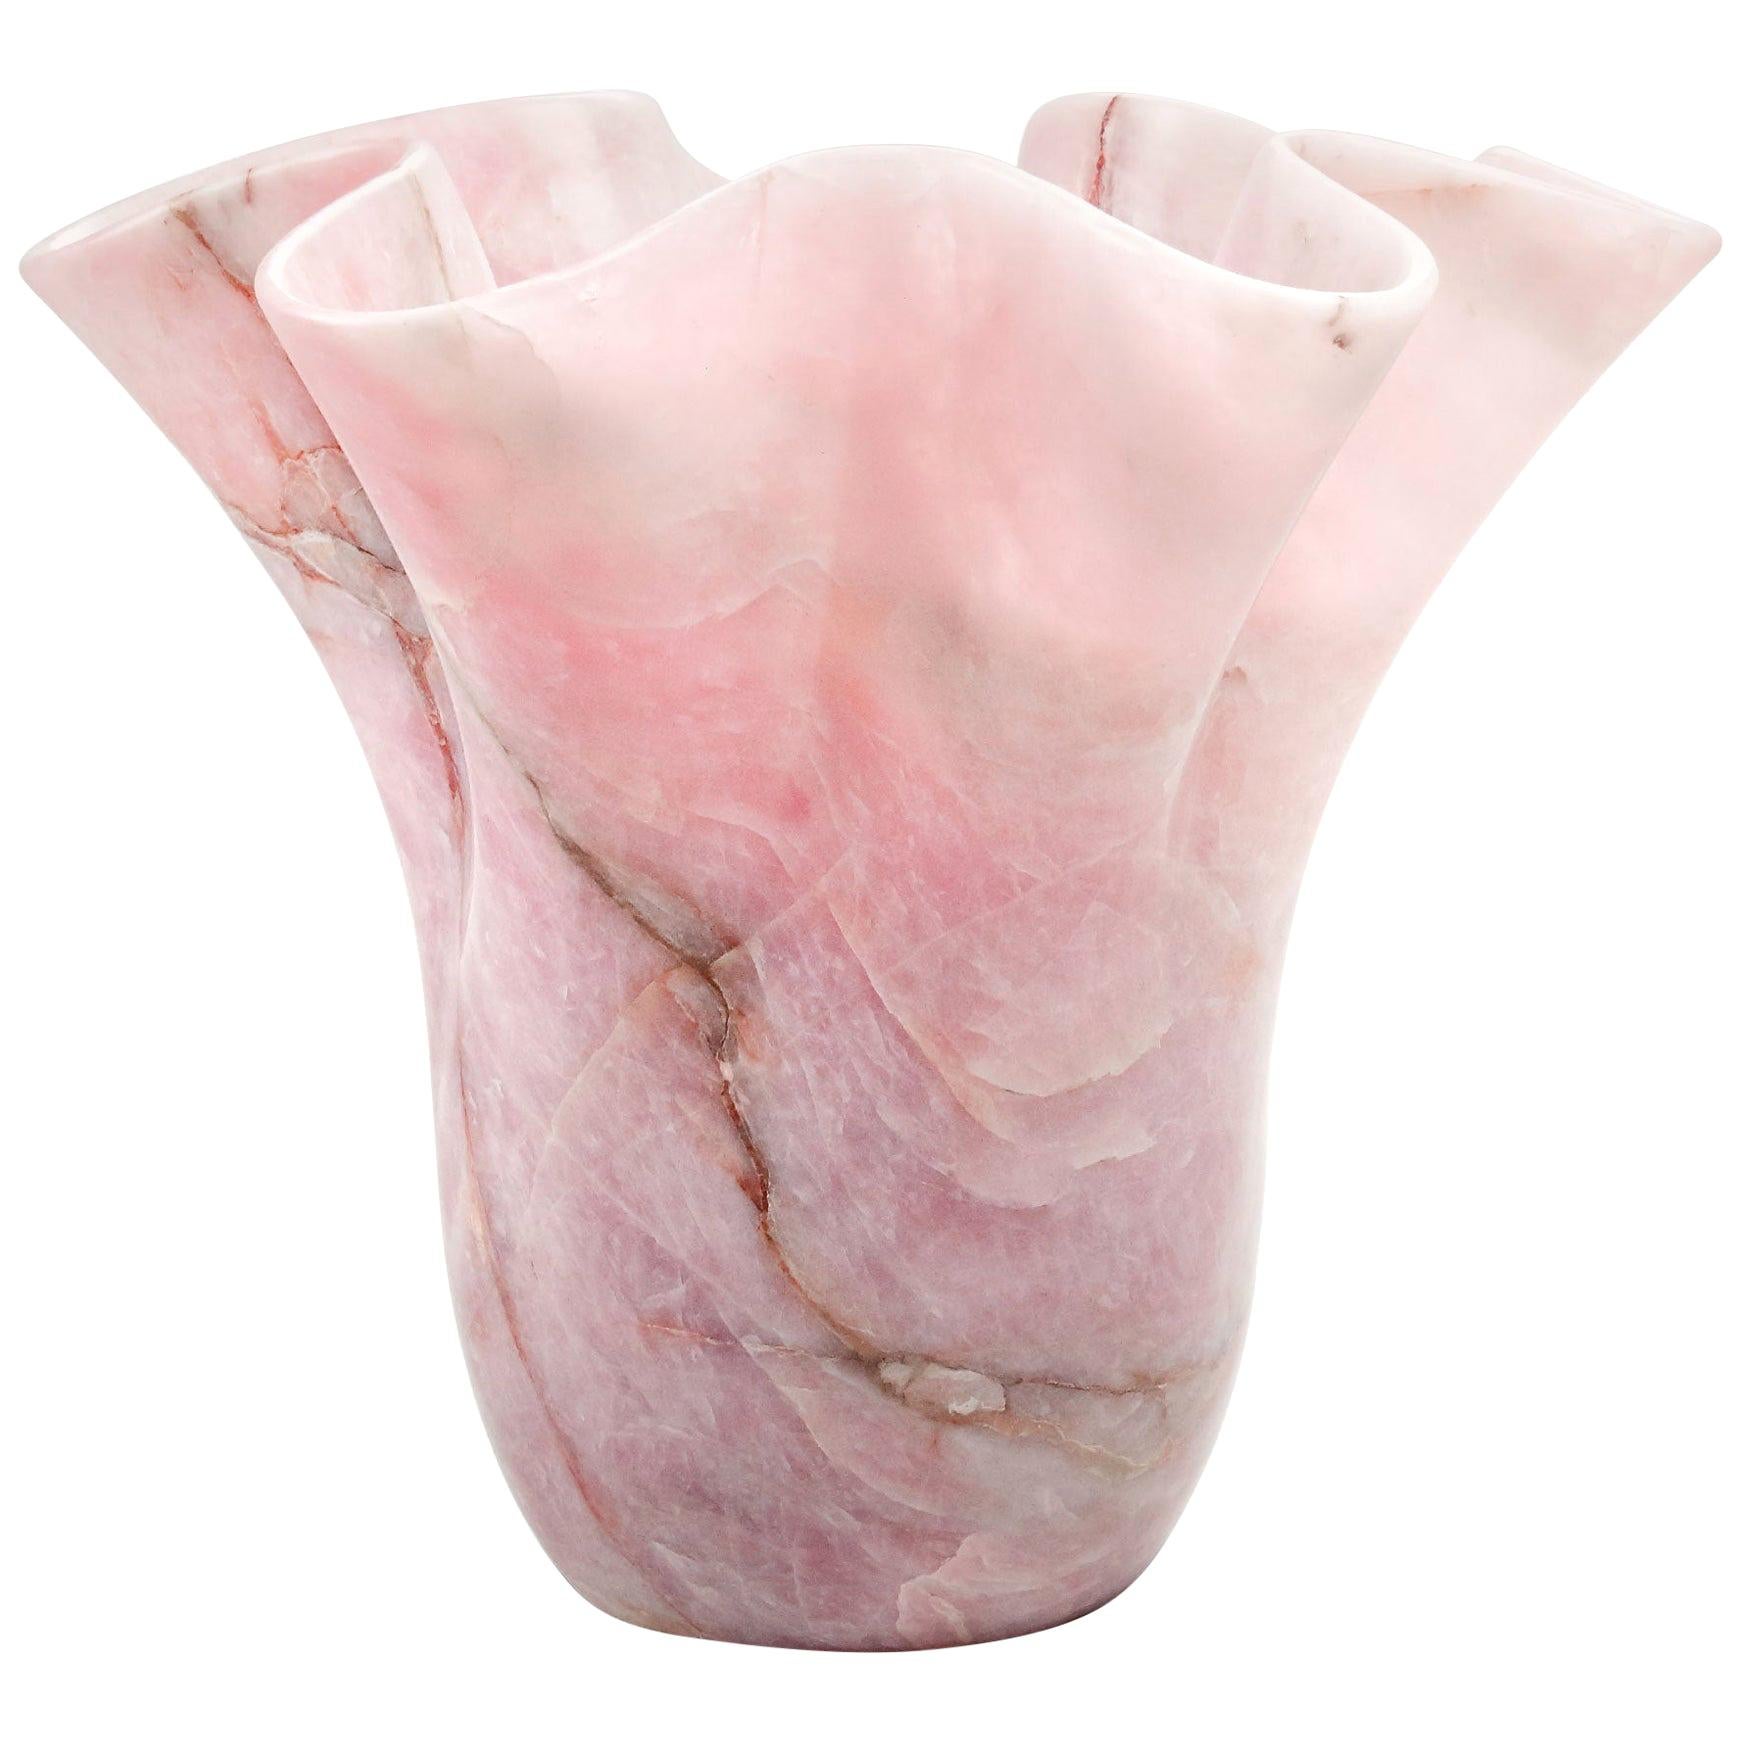 Vase Vessel Sculpture Pink Rose Quartz Marble Collectible Design Handmade Italy